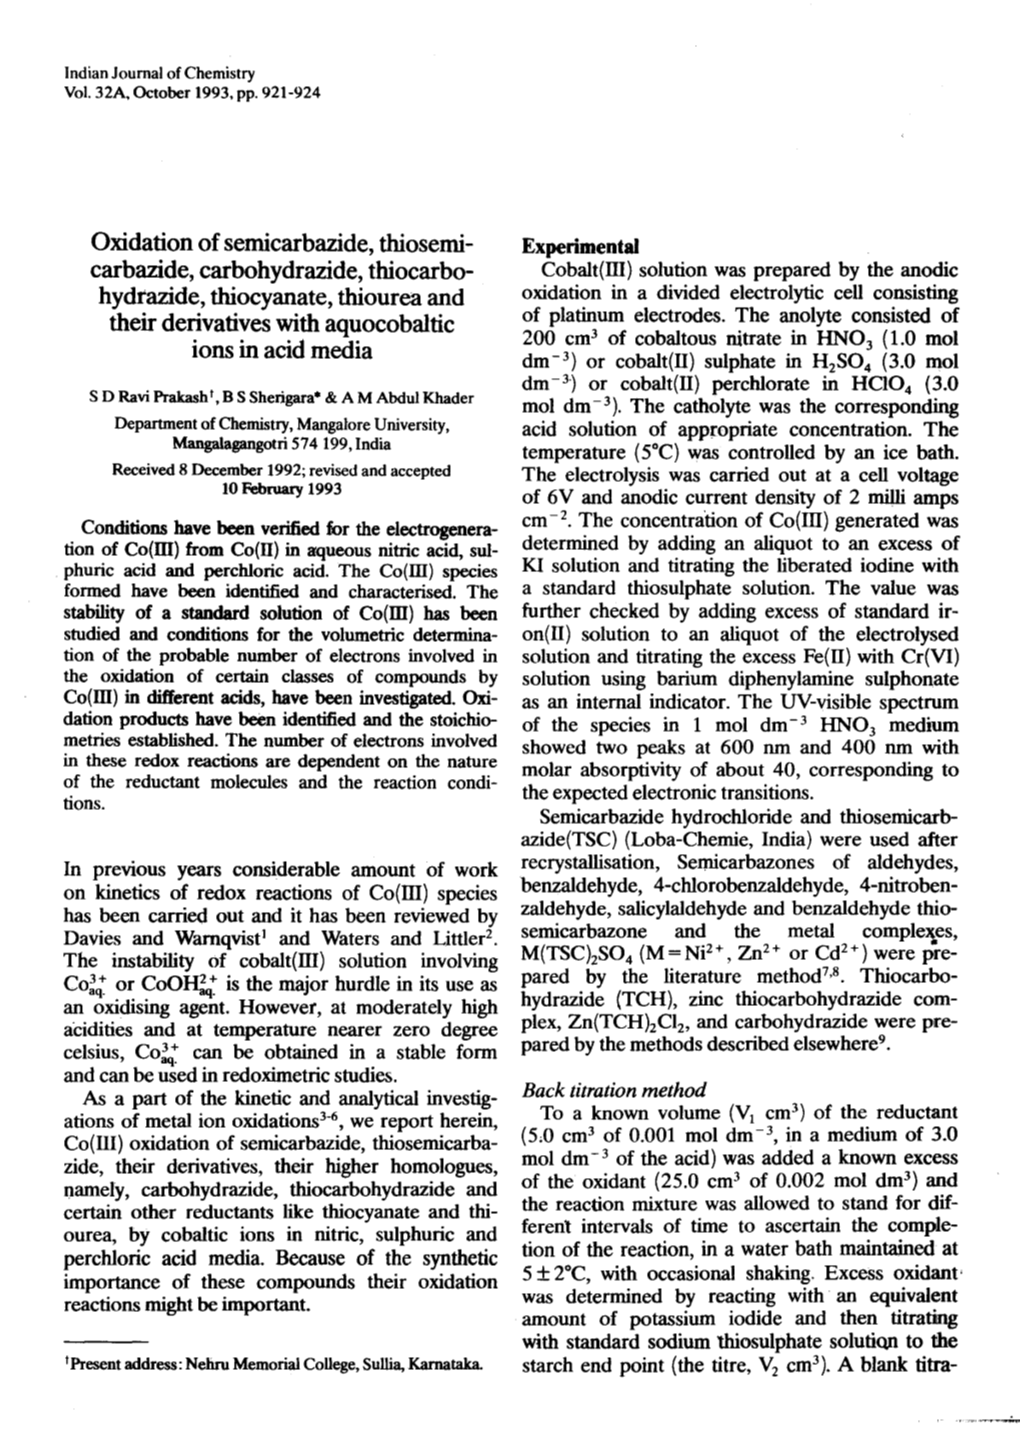 Oxidation Ofsemicarbazide, Thiosemi- Carbazide, Carbohydrazide